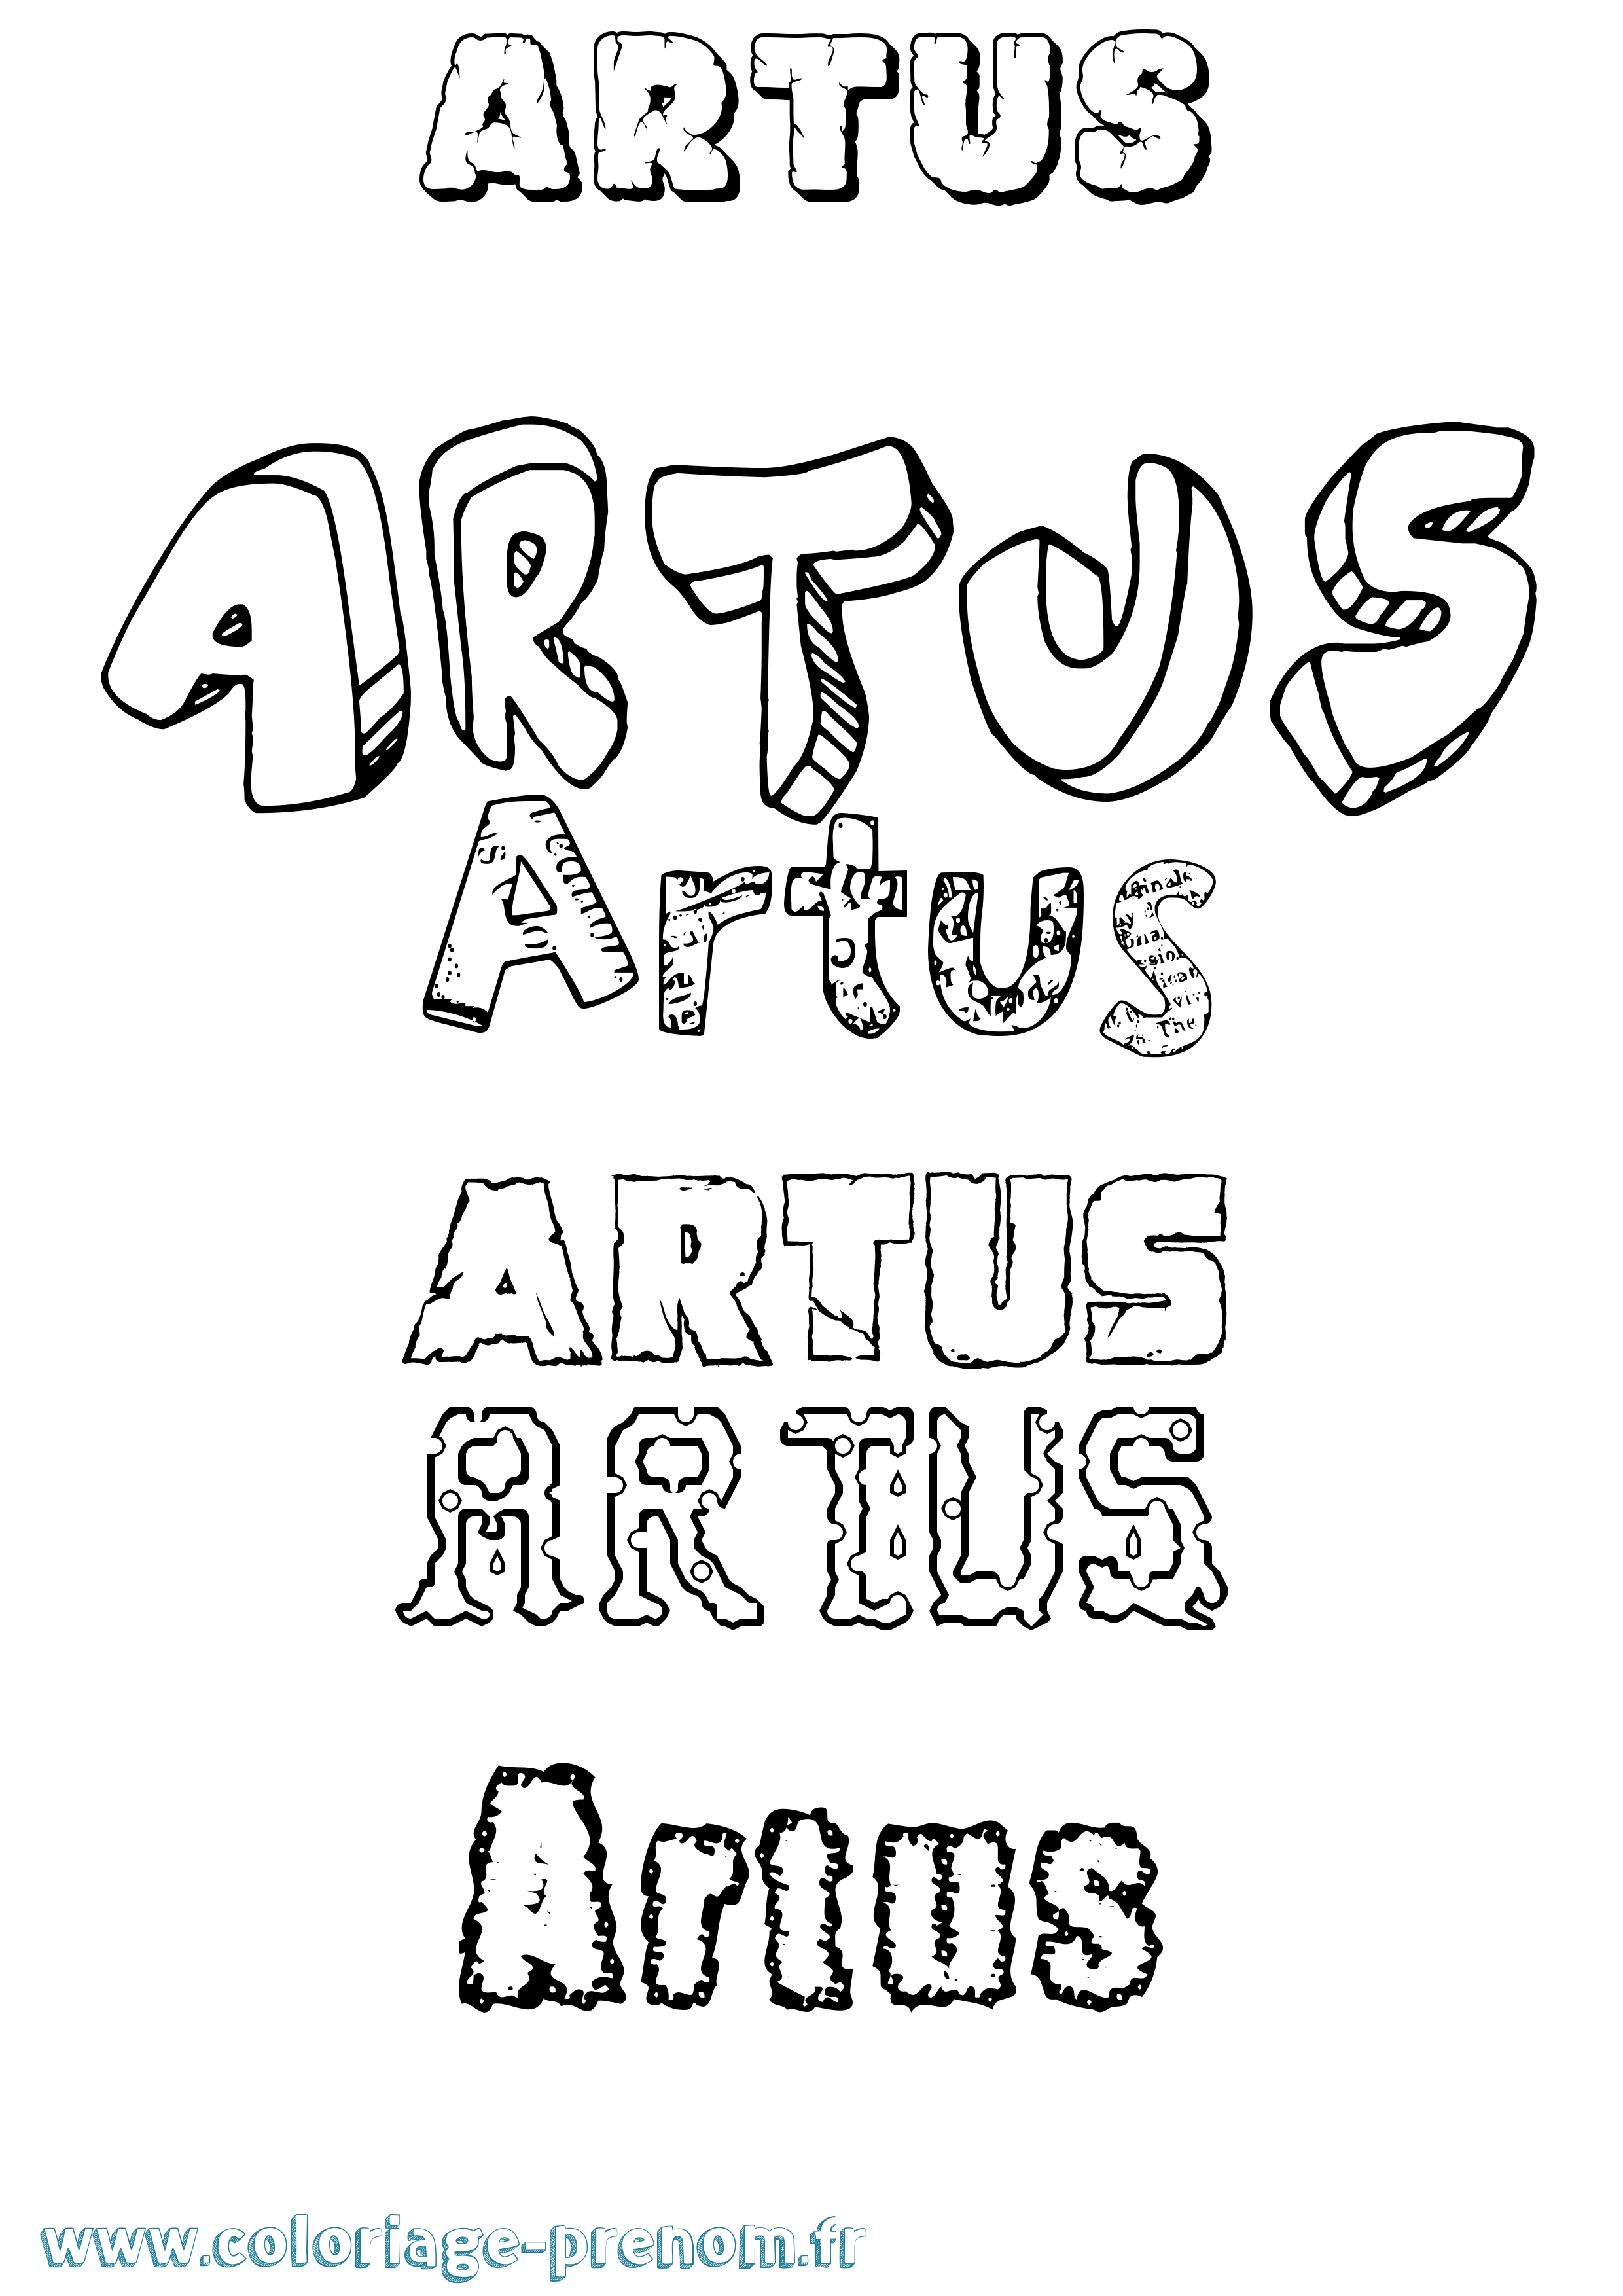 Coloriage prénom Artus